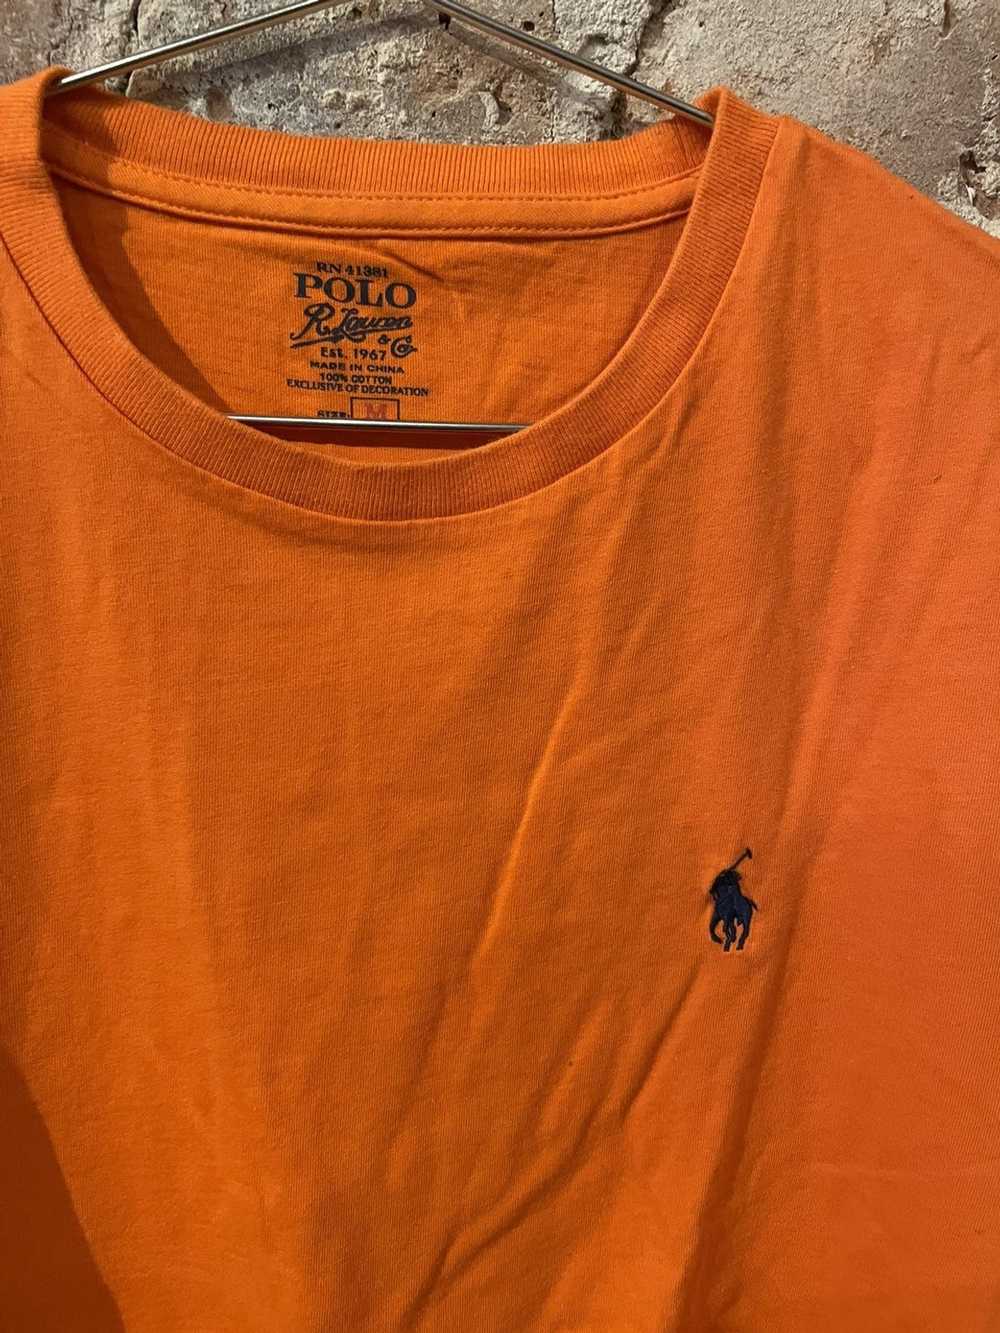 Polo Ralph Lauren 2 polo t shirts- longsleeve + s… - image 3